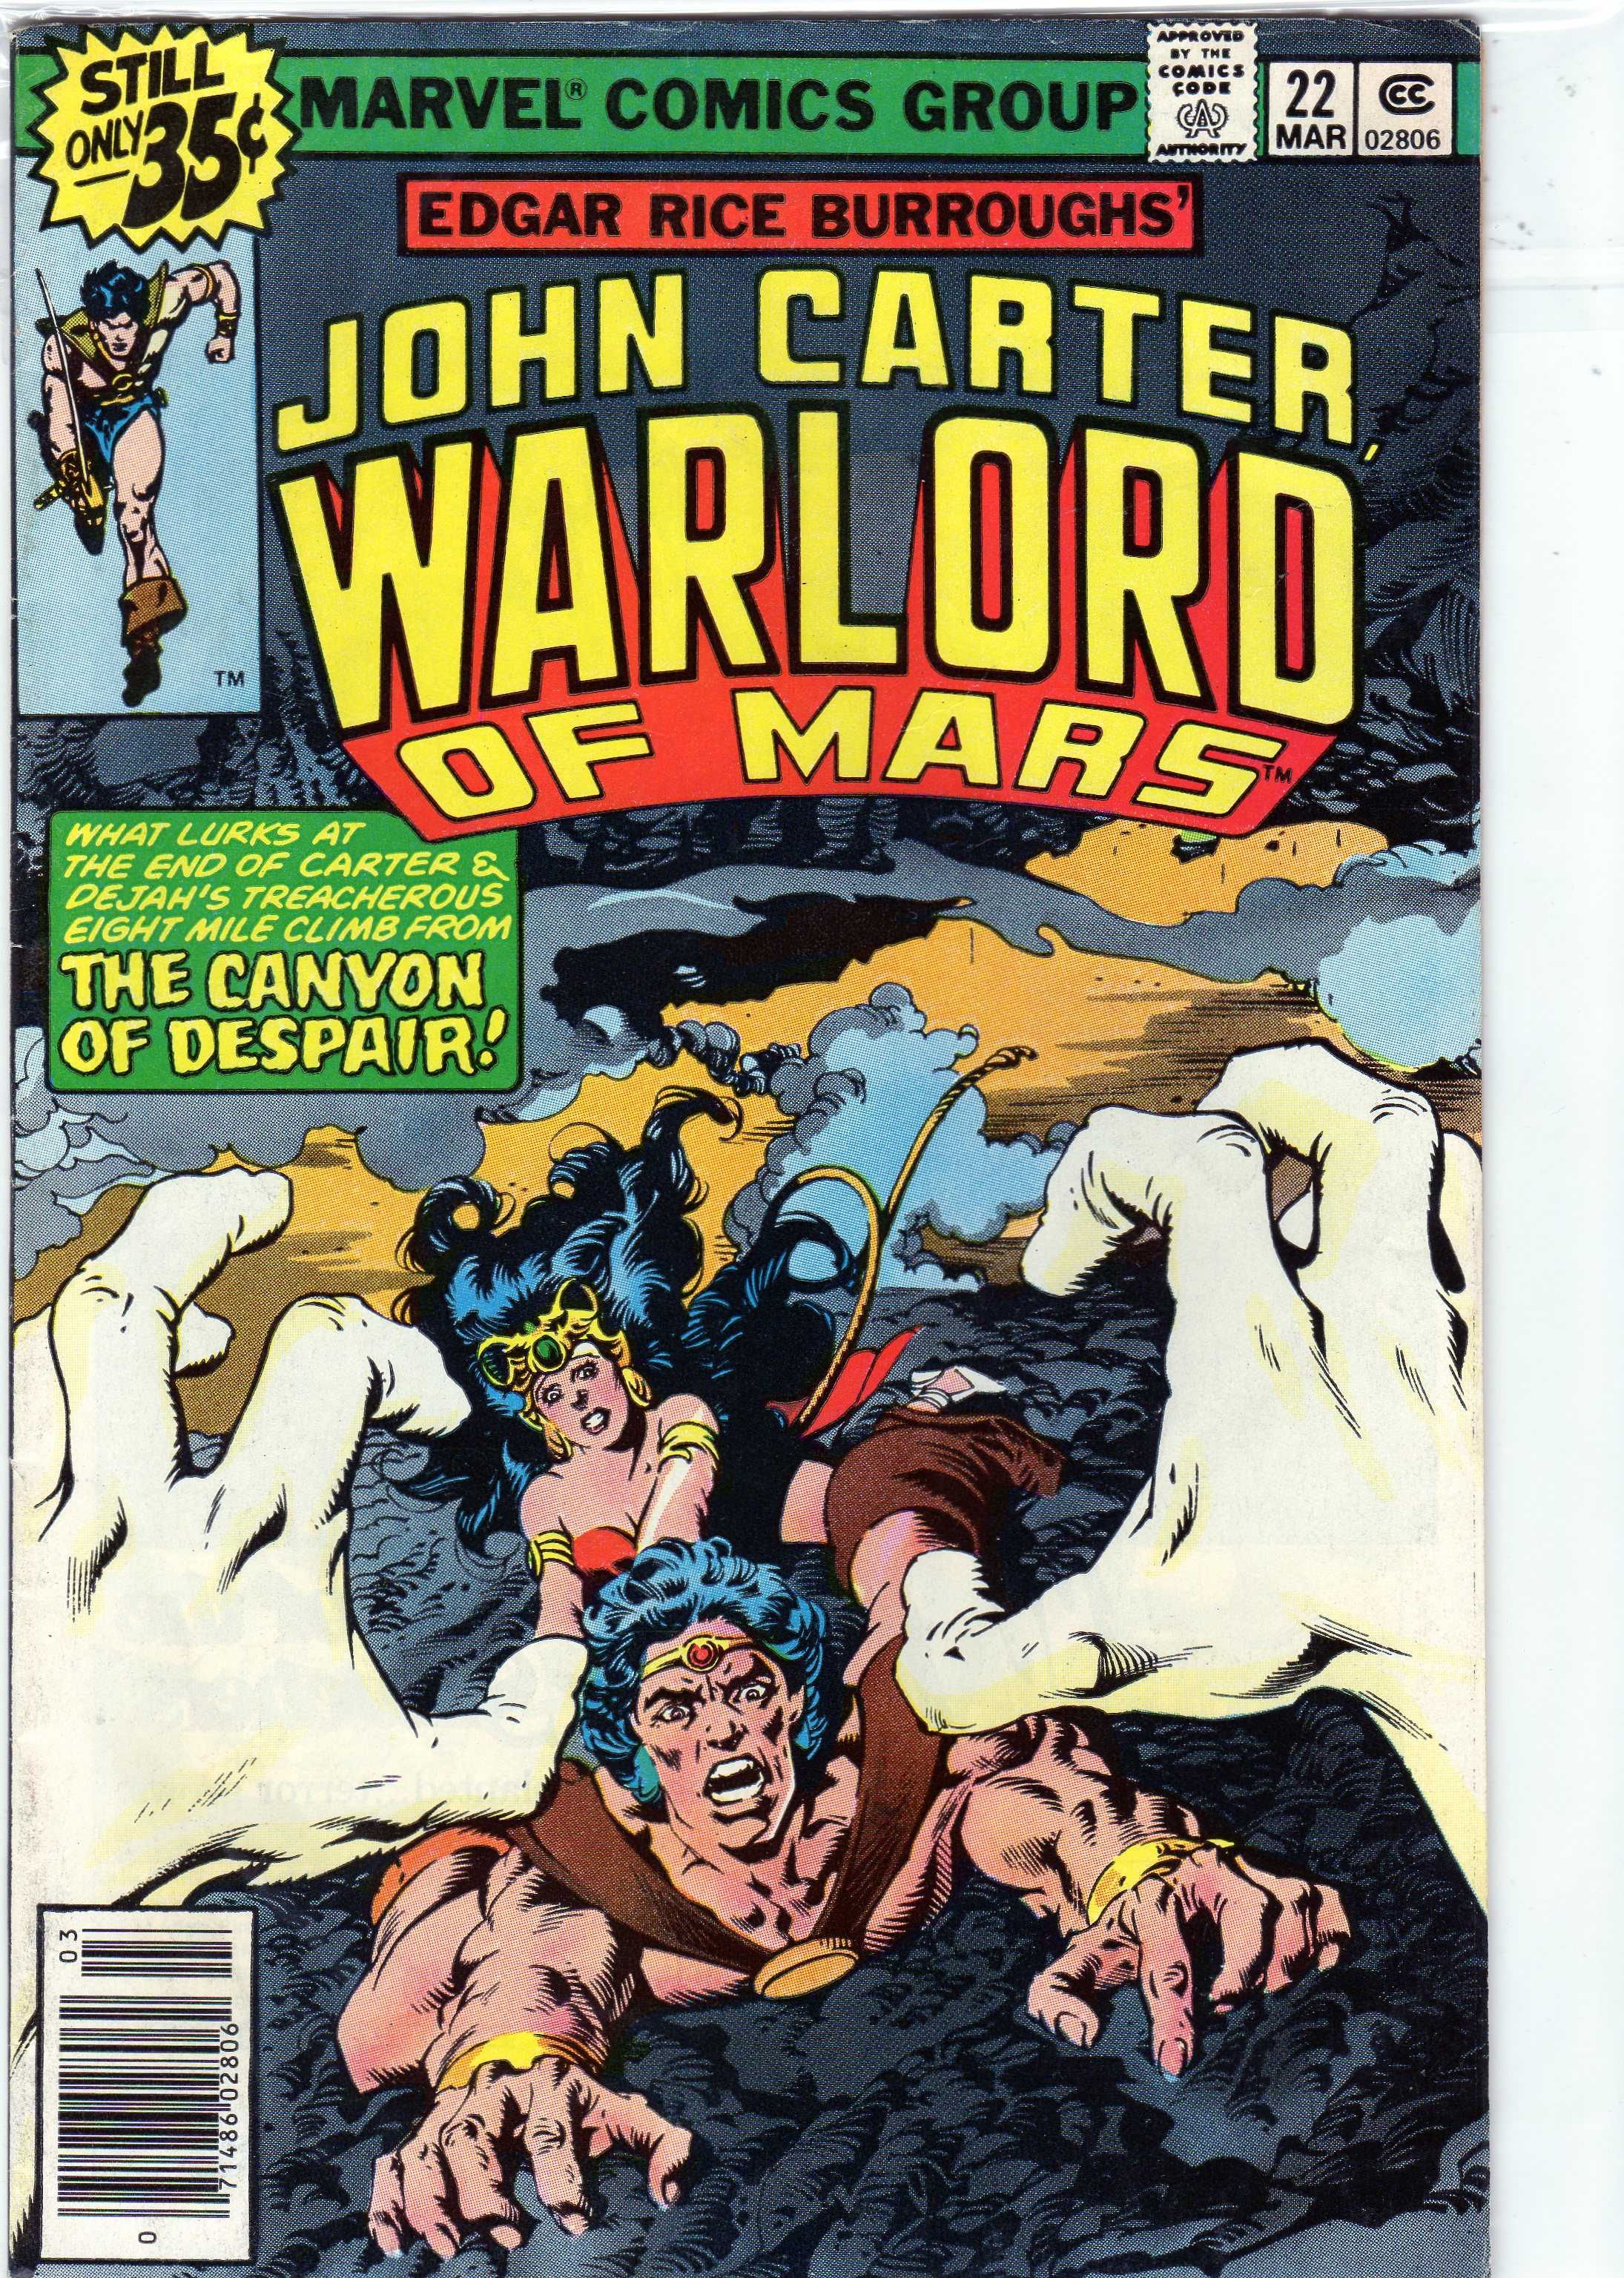 John Carter Warlord of Mars #22 The canion of Despair! benzi desenate